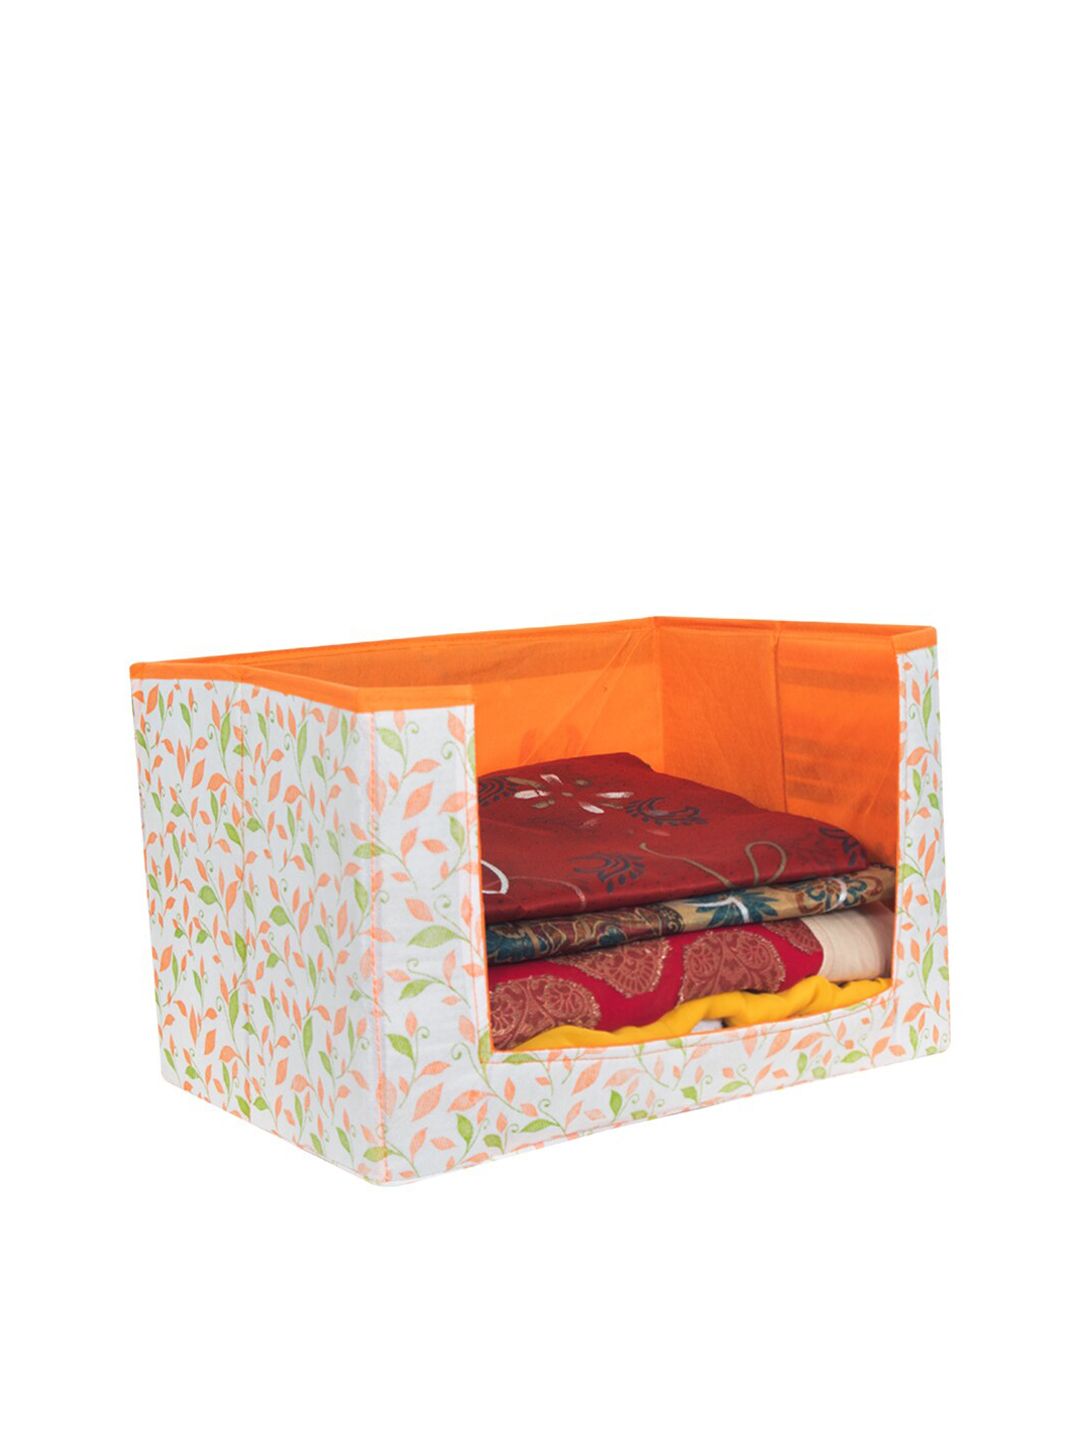 prettykrafts Orange & White Leaf Printed Foldable Rectangle Saree Stacker Organiser Price in India